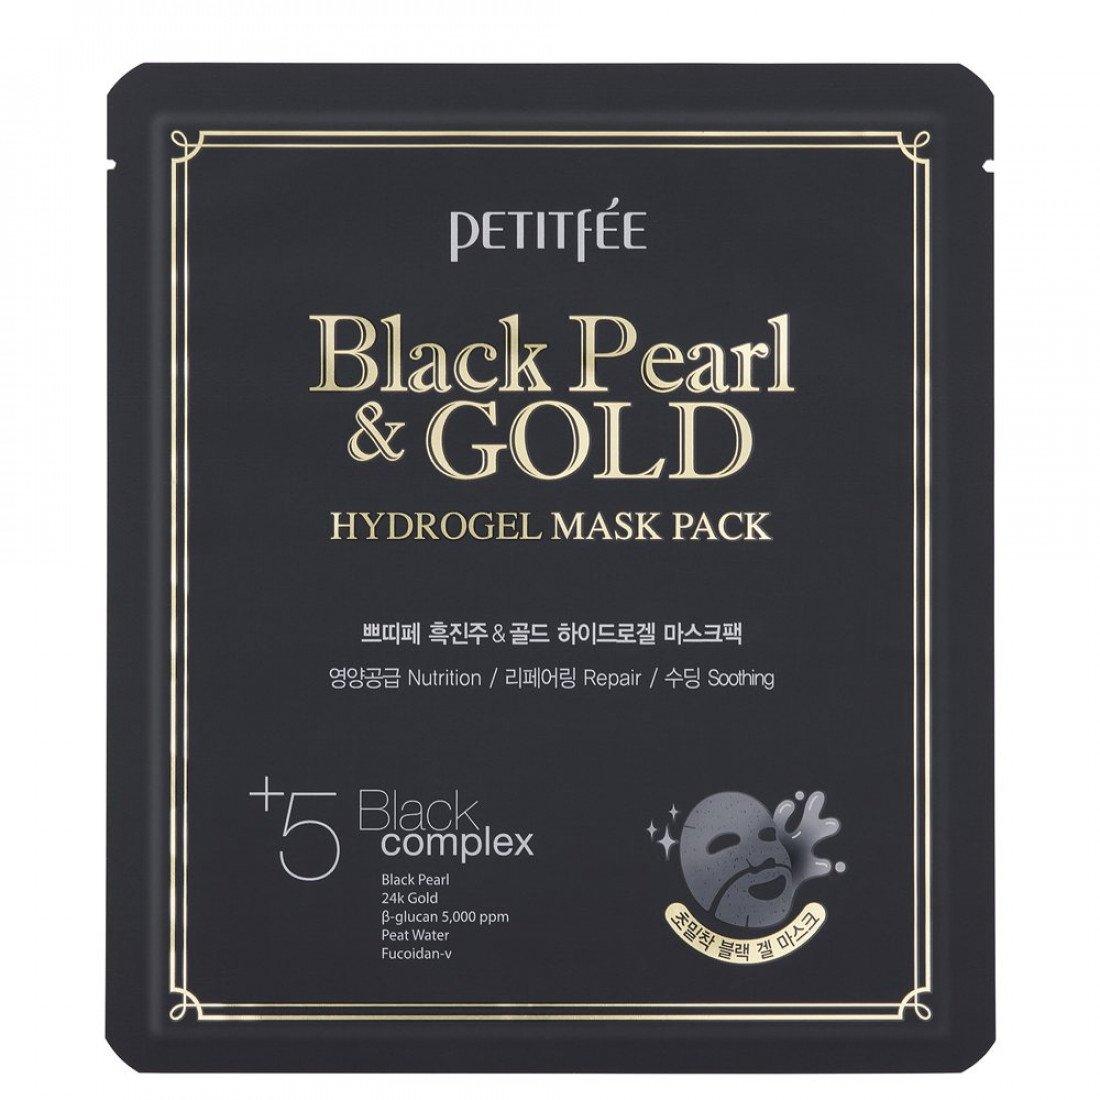 Petitfee Black Pearl & Gold Mask Pack